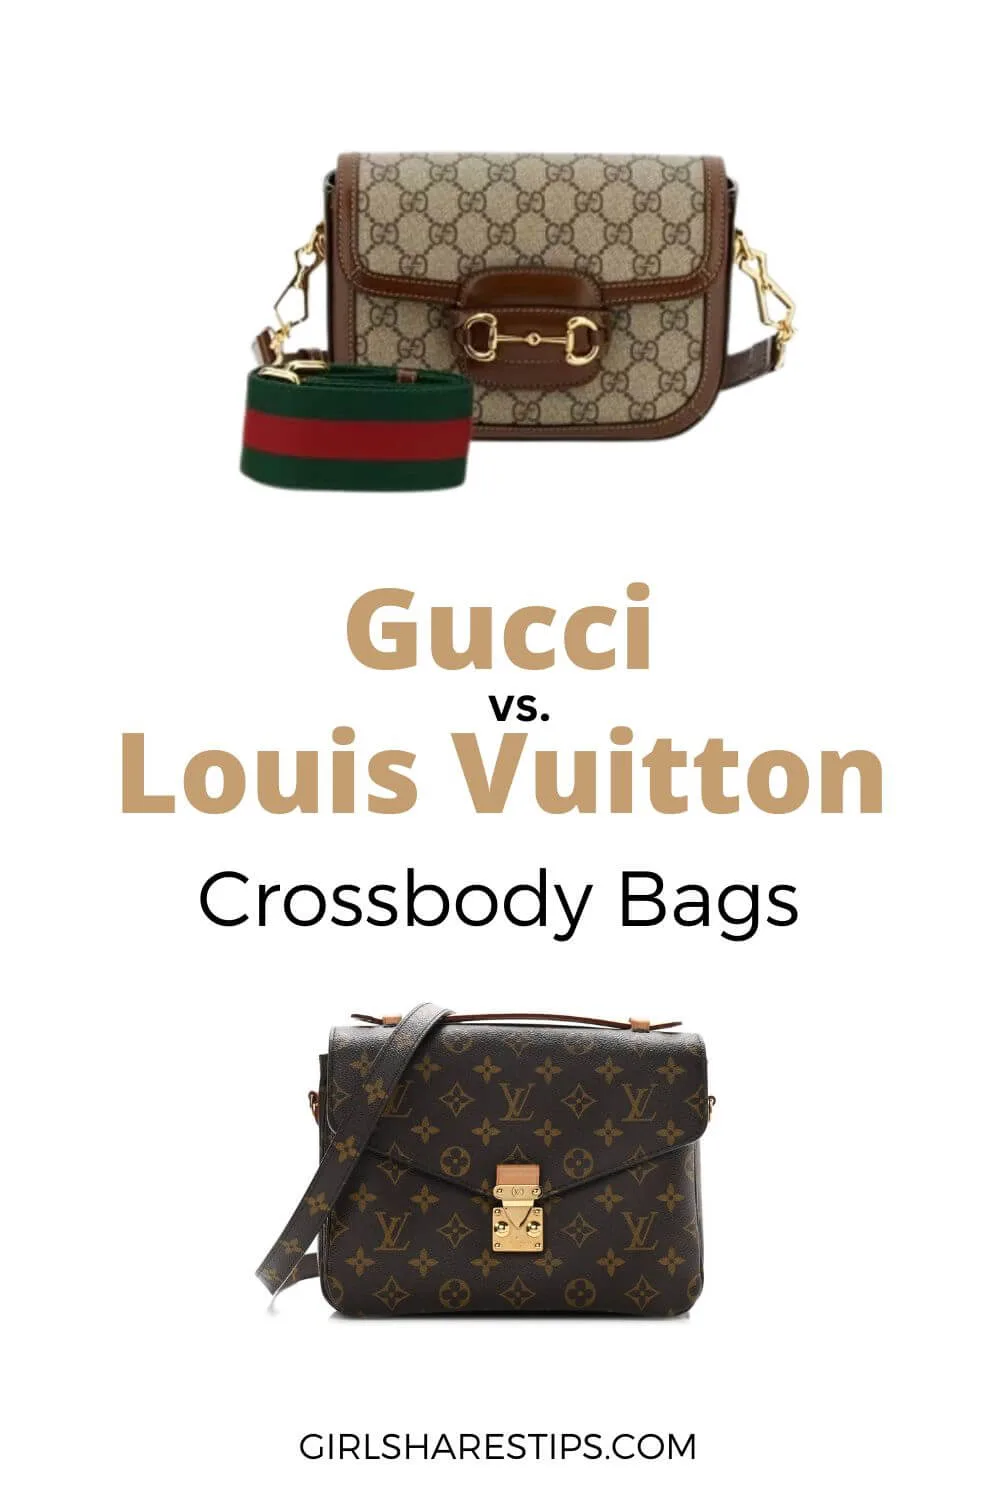 Gucci vs Louis Vuitton crossbody bags